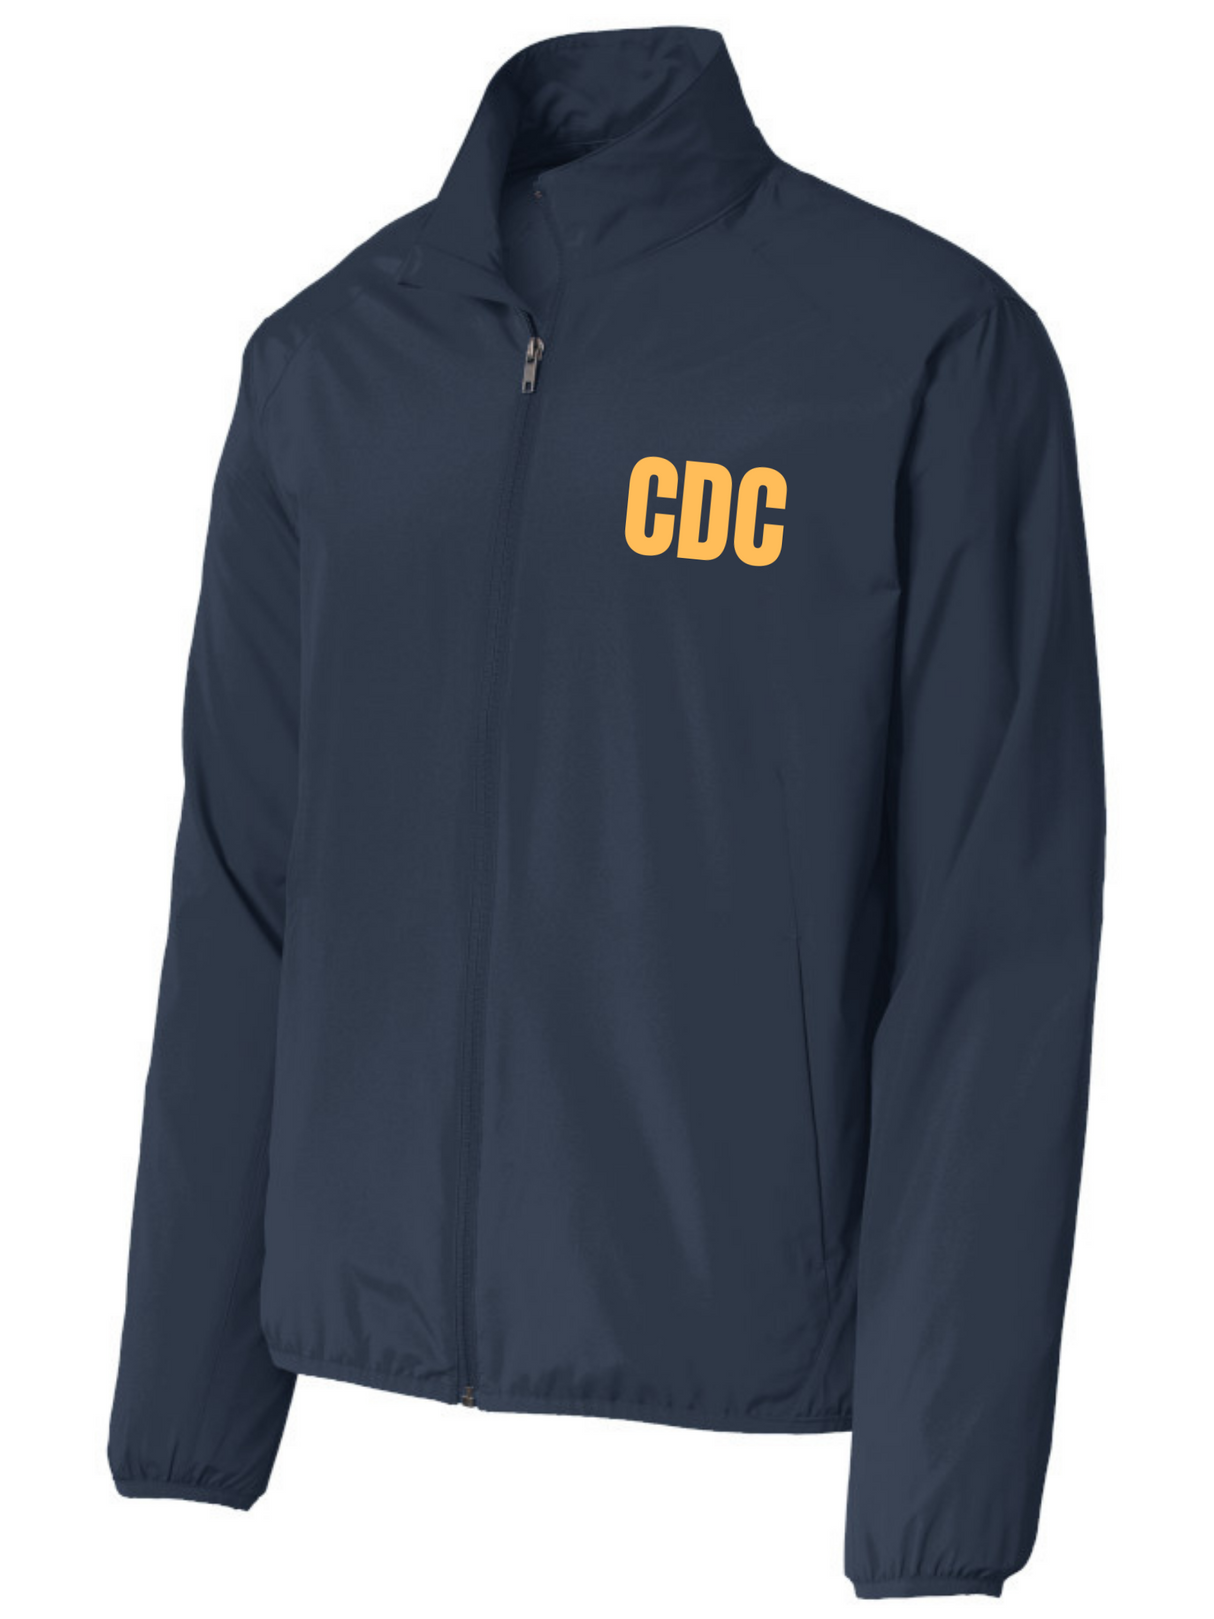 CDC Agency Identifier Jacket - FEDS Apparel